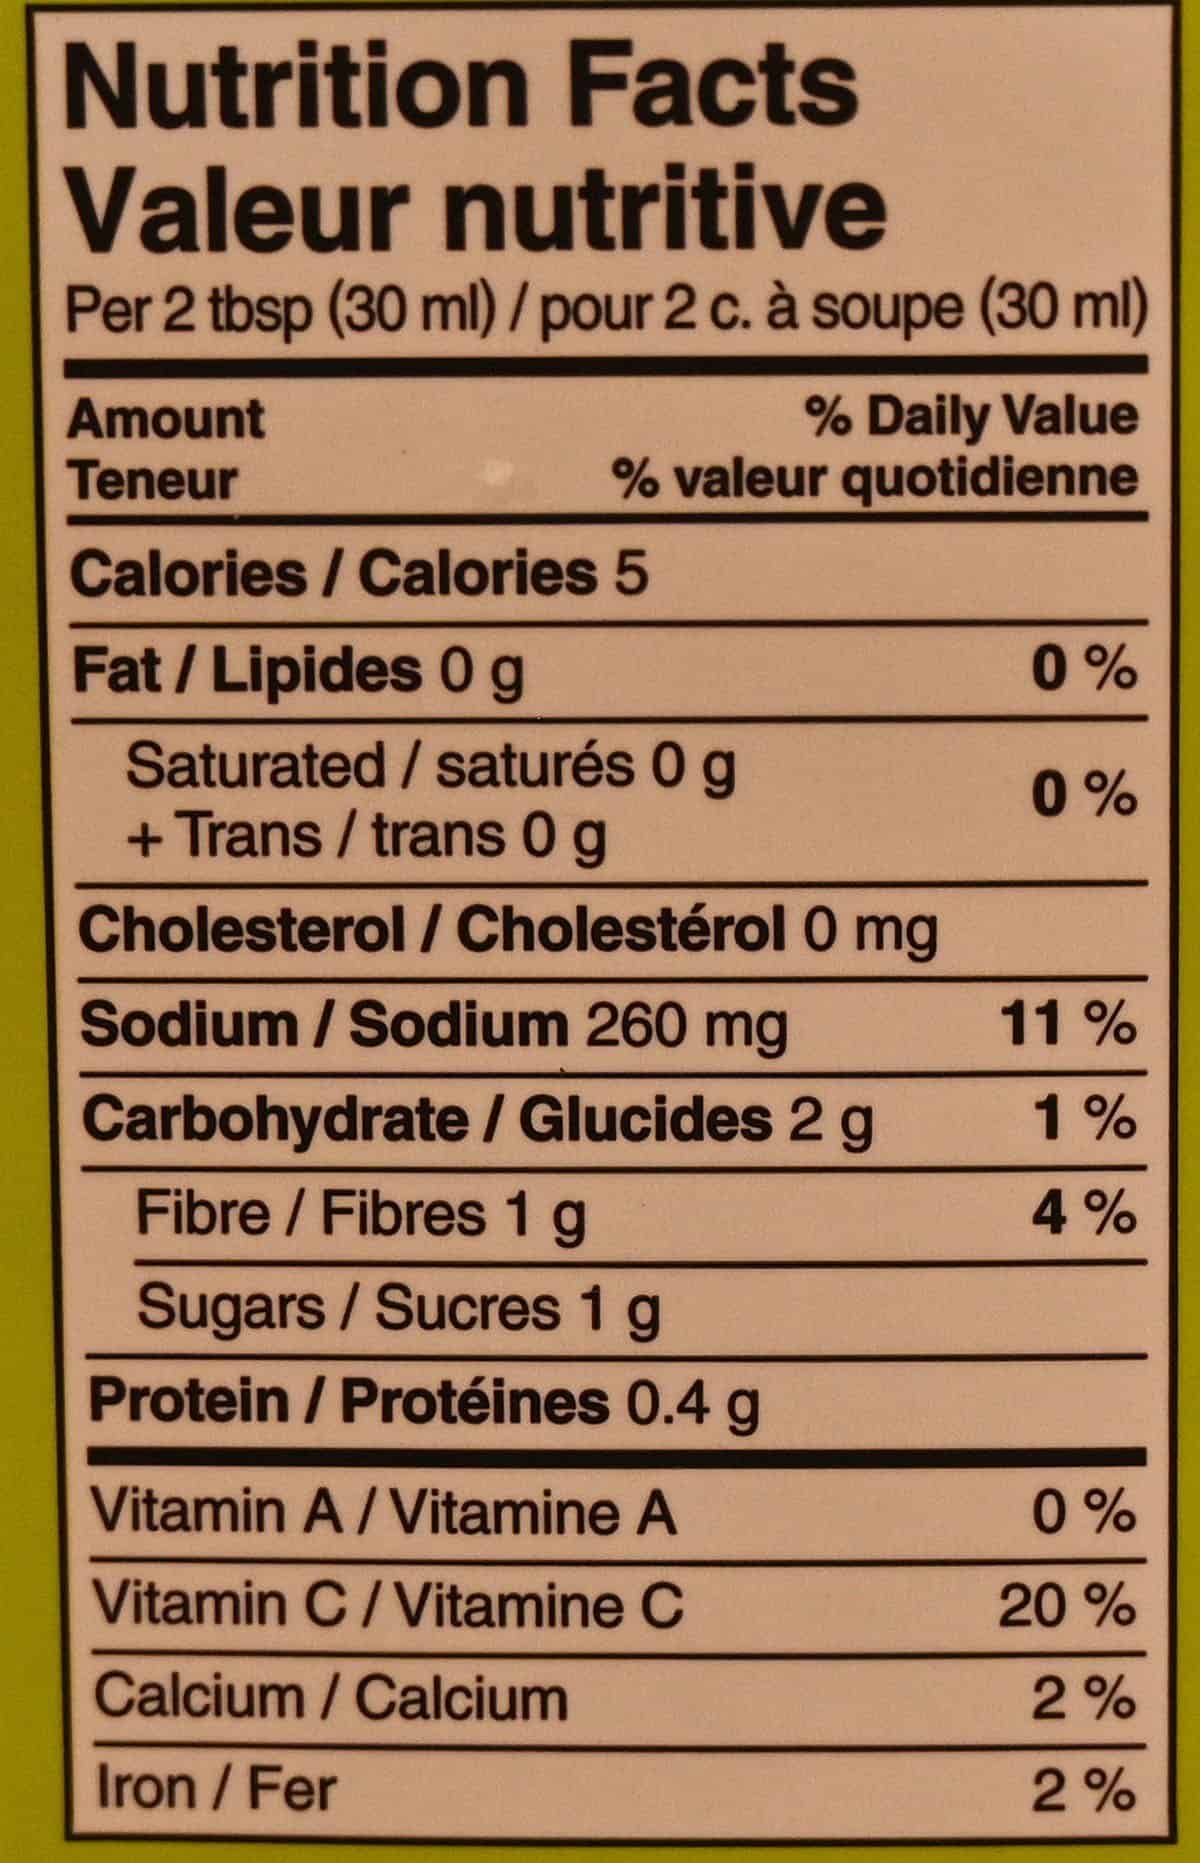 Costco Wildbrine Raw Organic Sauerkraut nutrition facts label. 